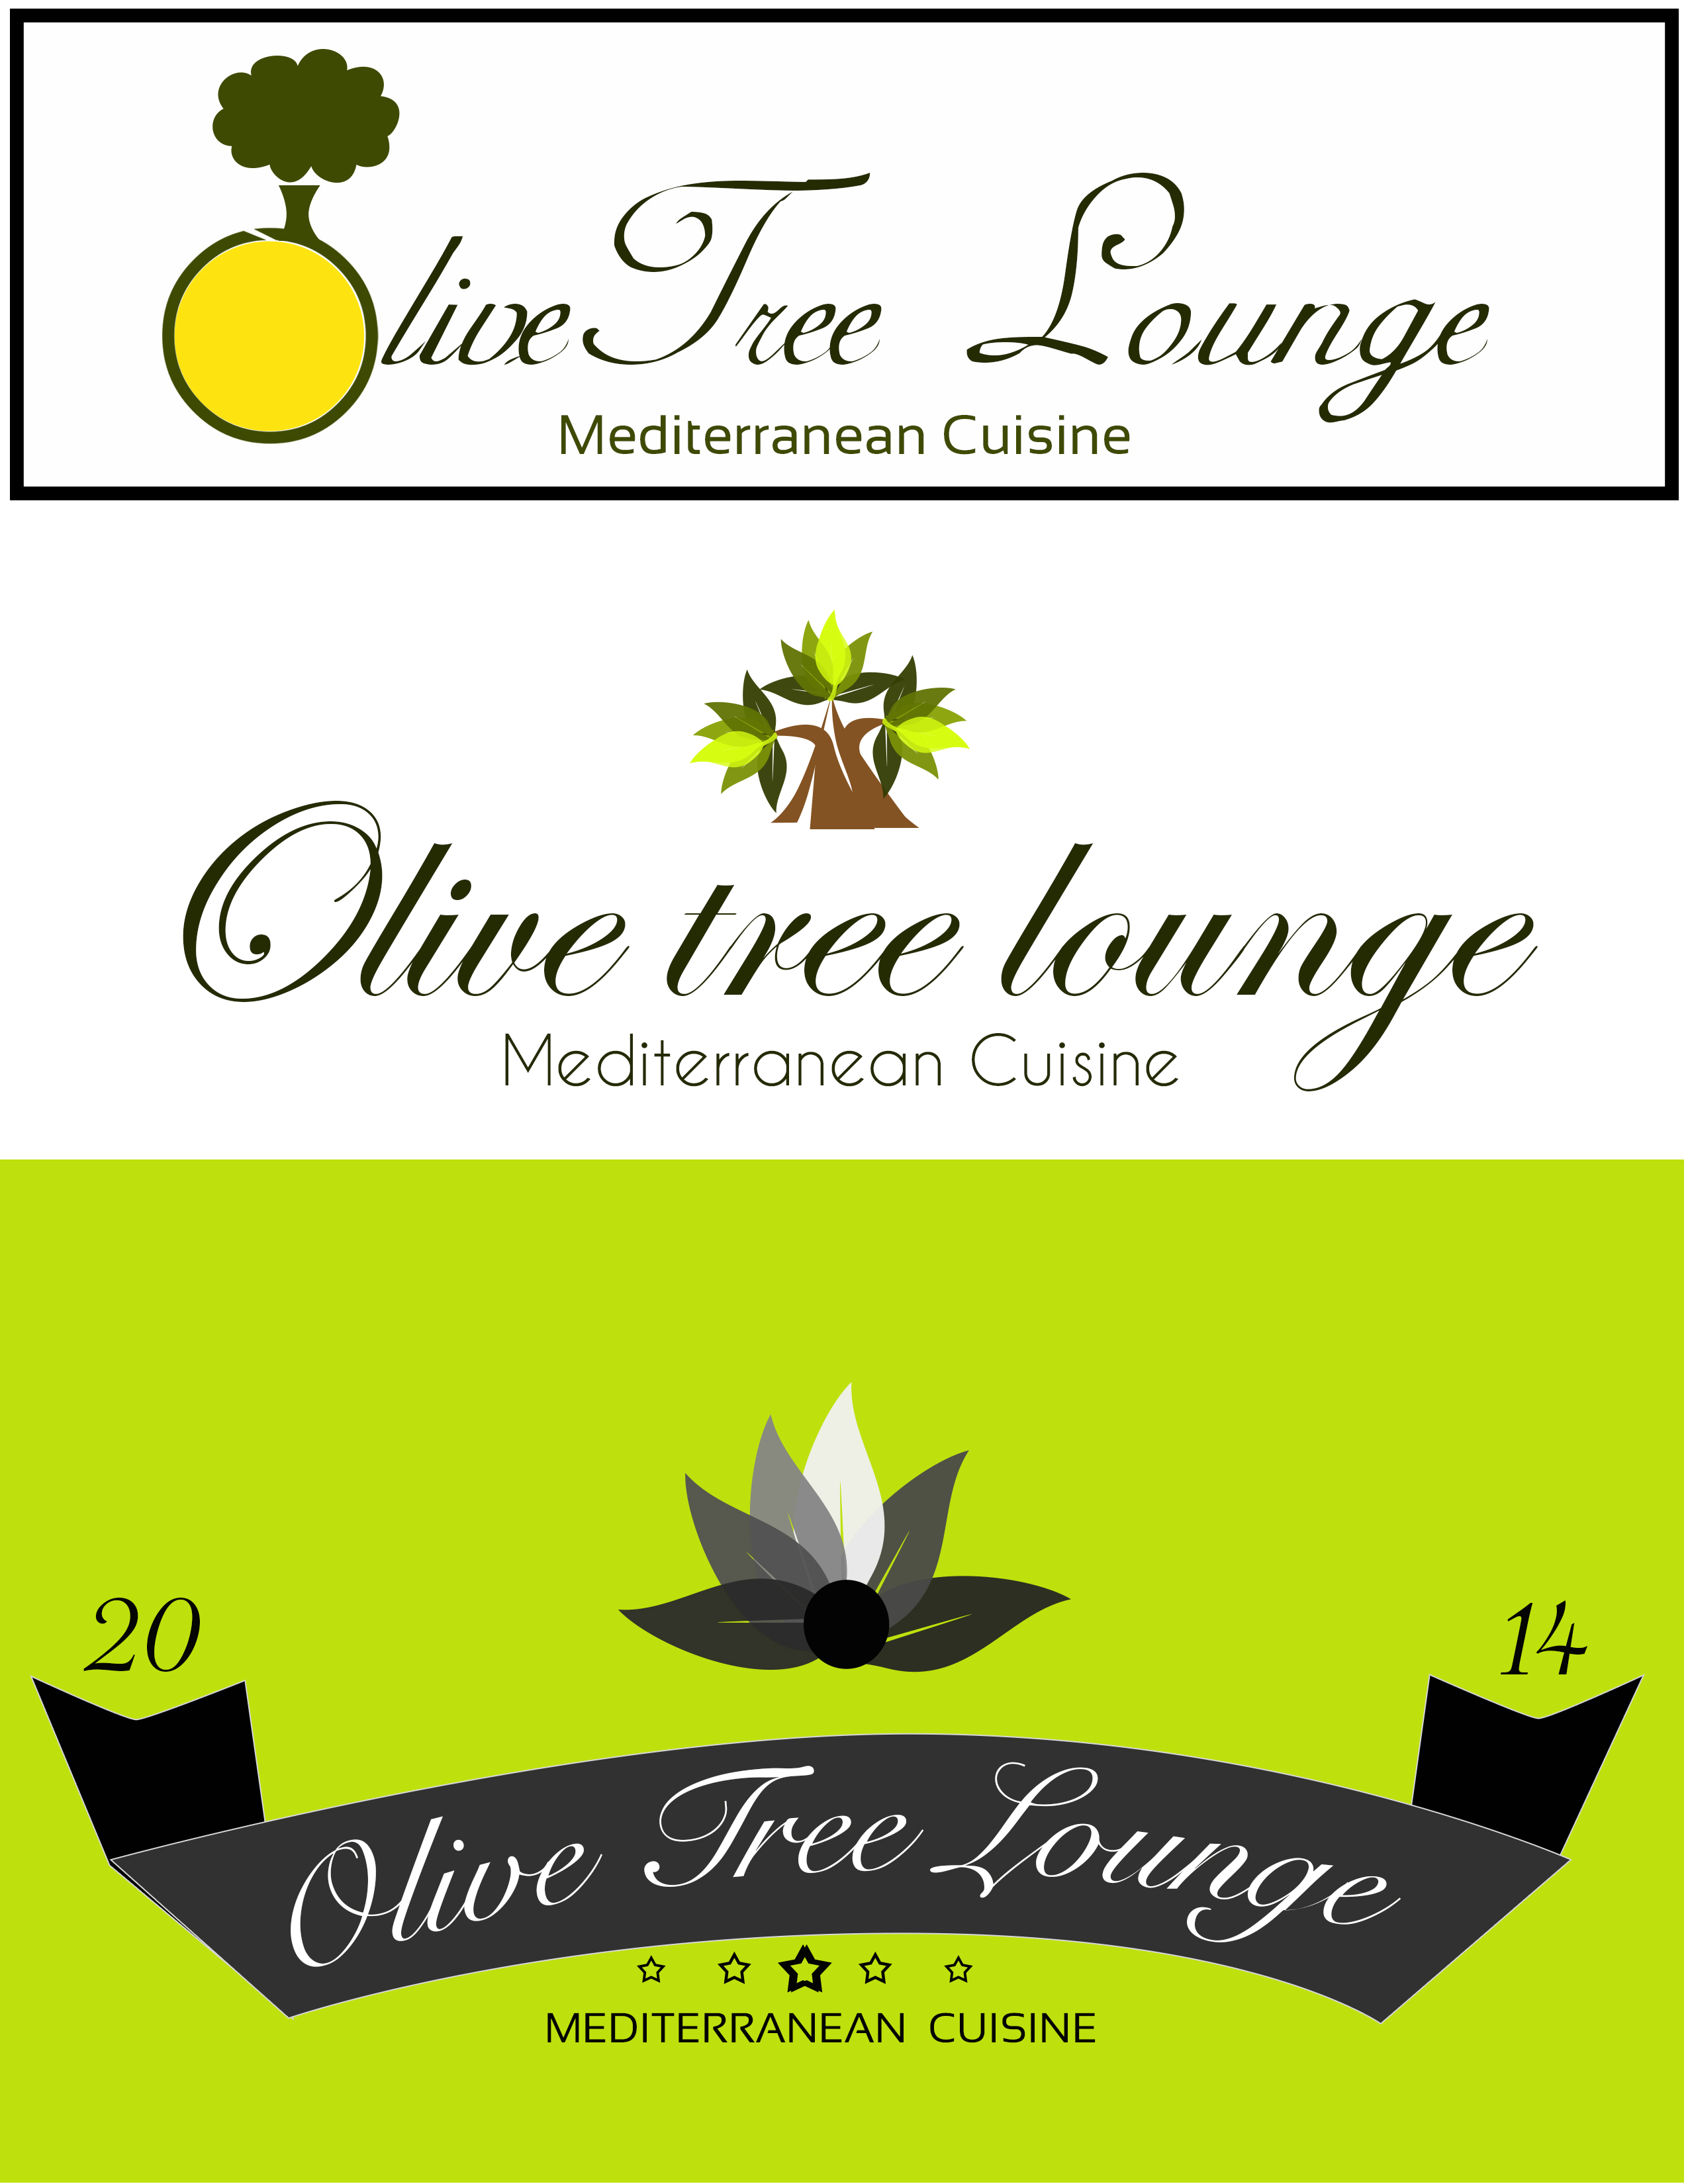 Abdul's portfolio project: Olive tree logo options